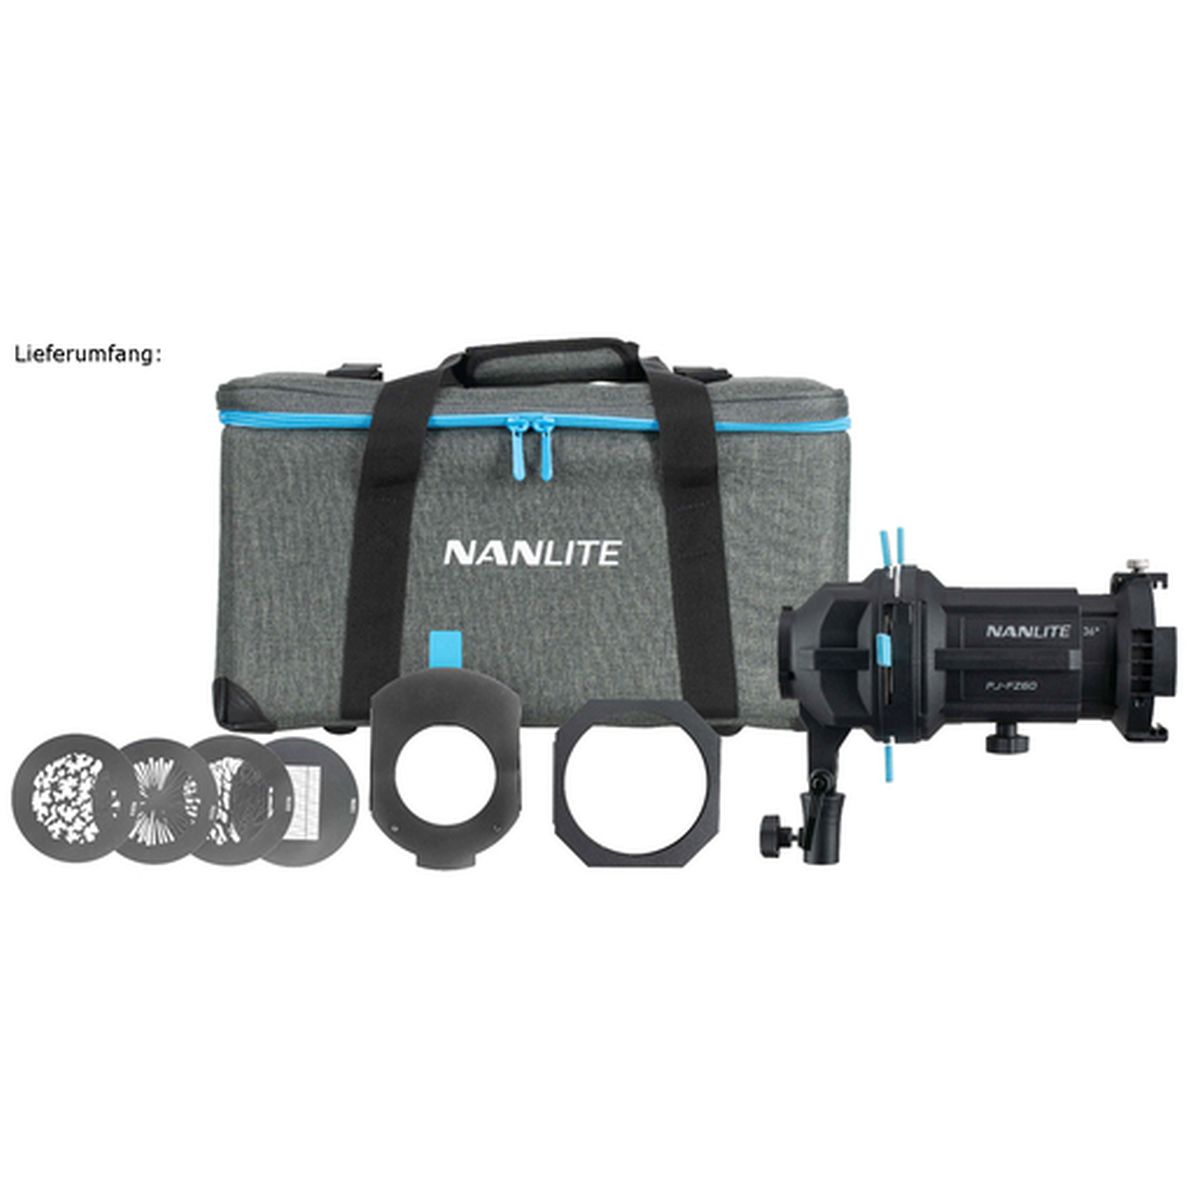 Nanlite PJ-FMM-36 Projektionsvorsatz (Forza 60/150)